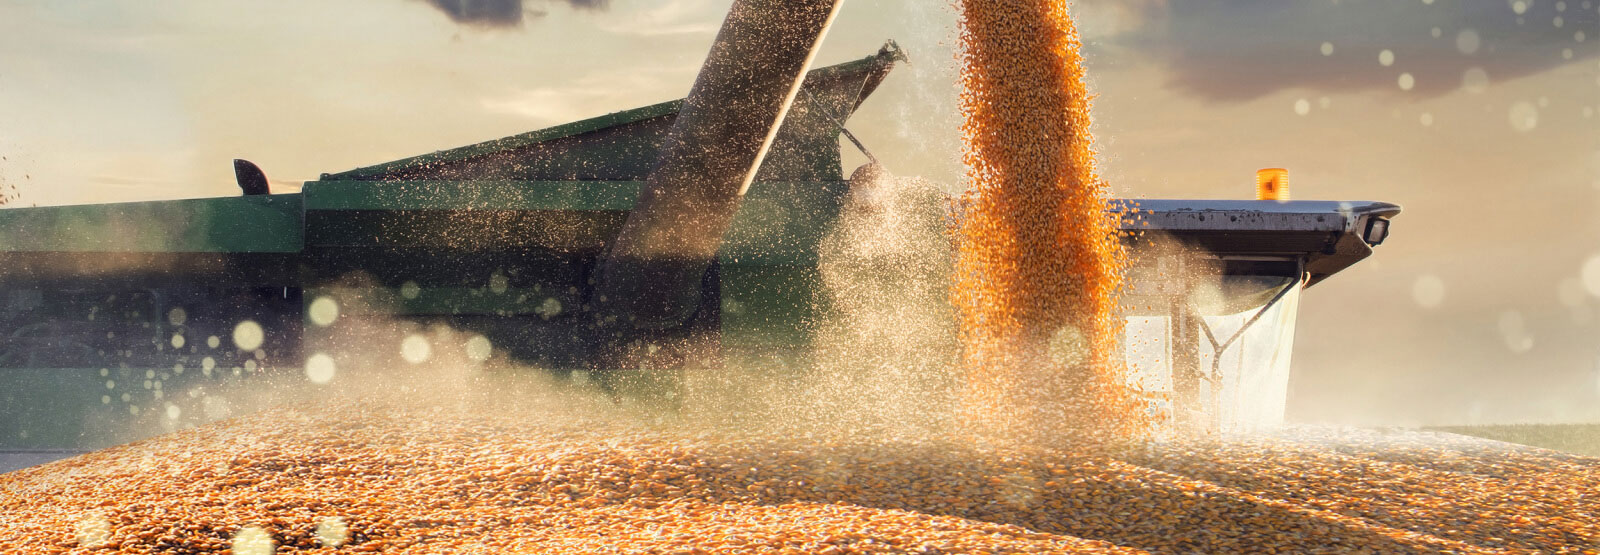 Large farm equipment processing grain